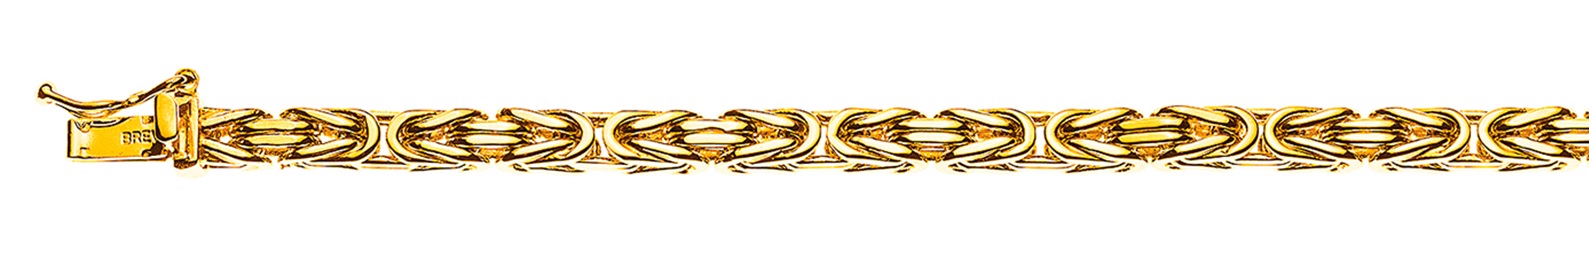 AURONOS Prestige Armband 18k Gelbgold Königskette 3.5mm 19cm